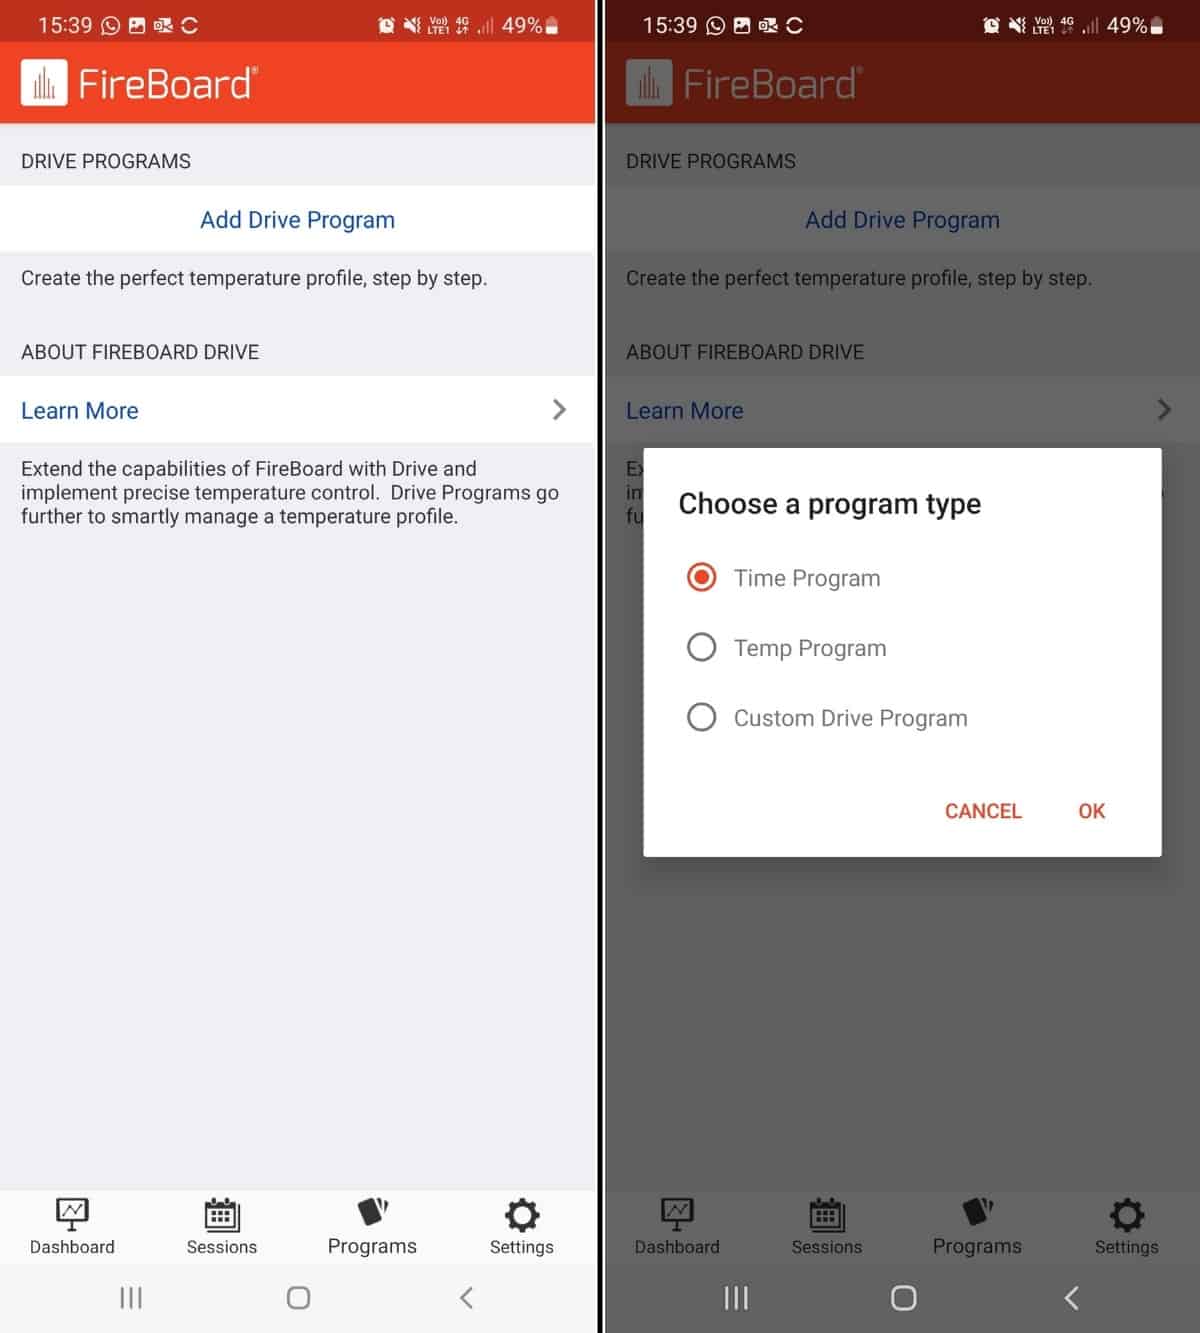 FireBoard app screenshots showing how to select a blower program